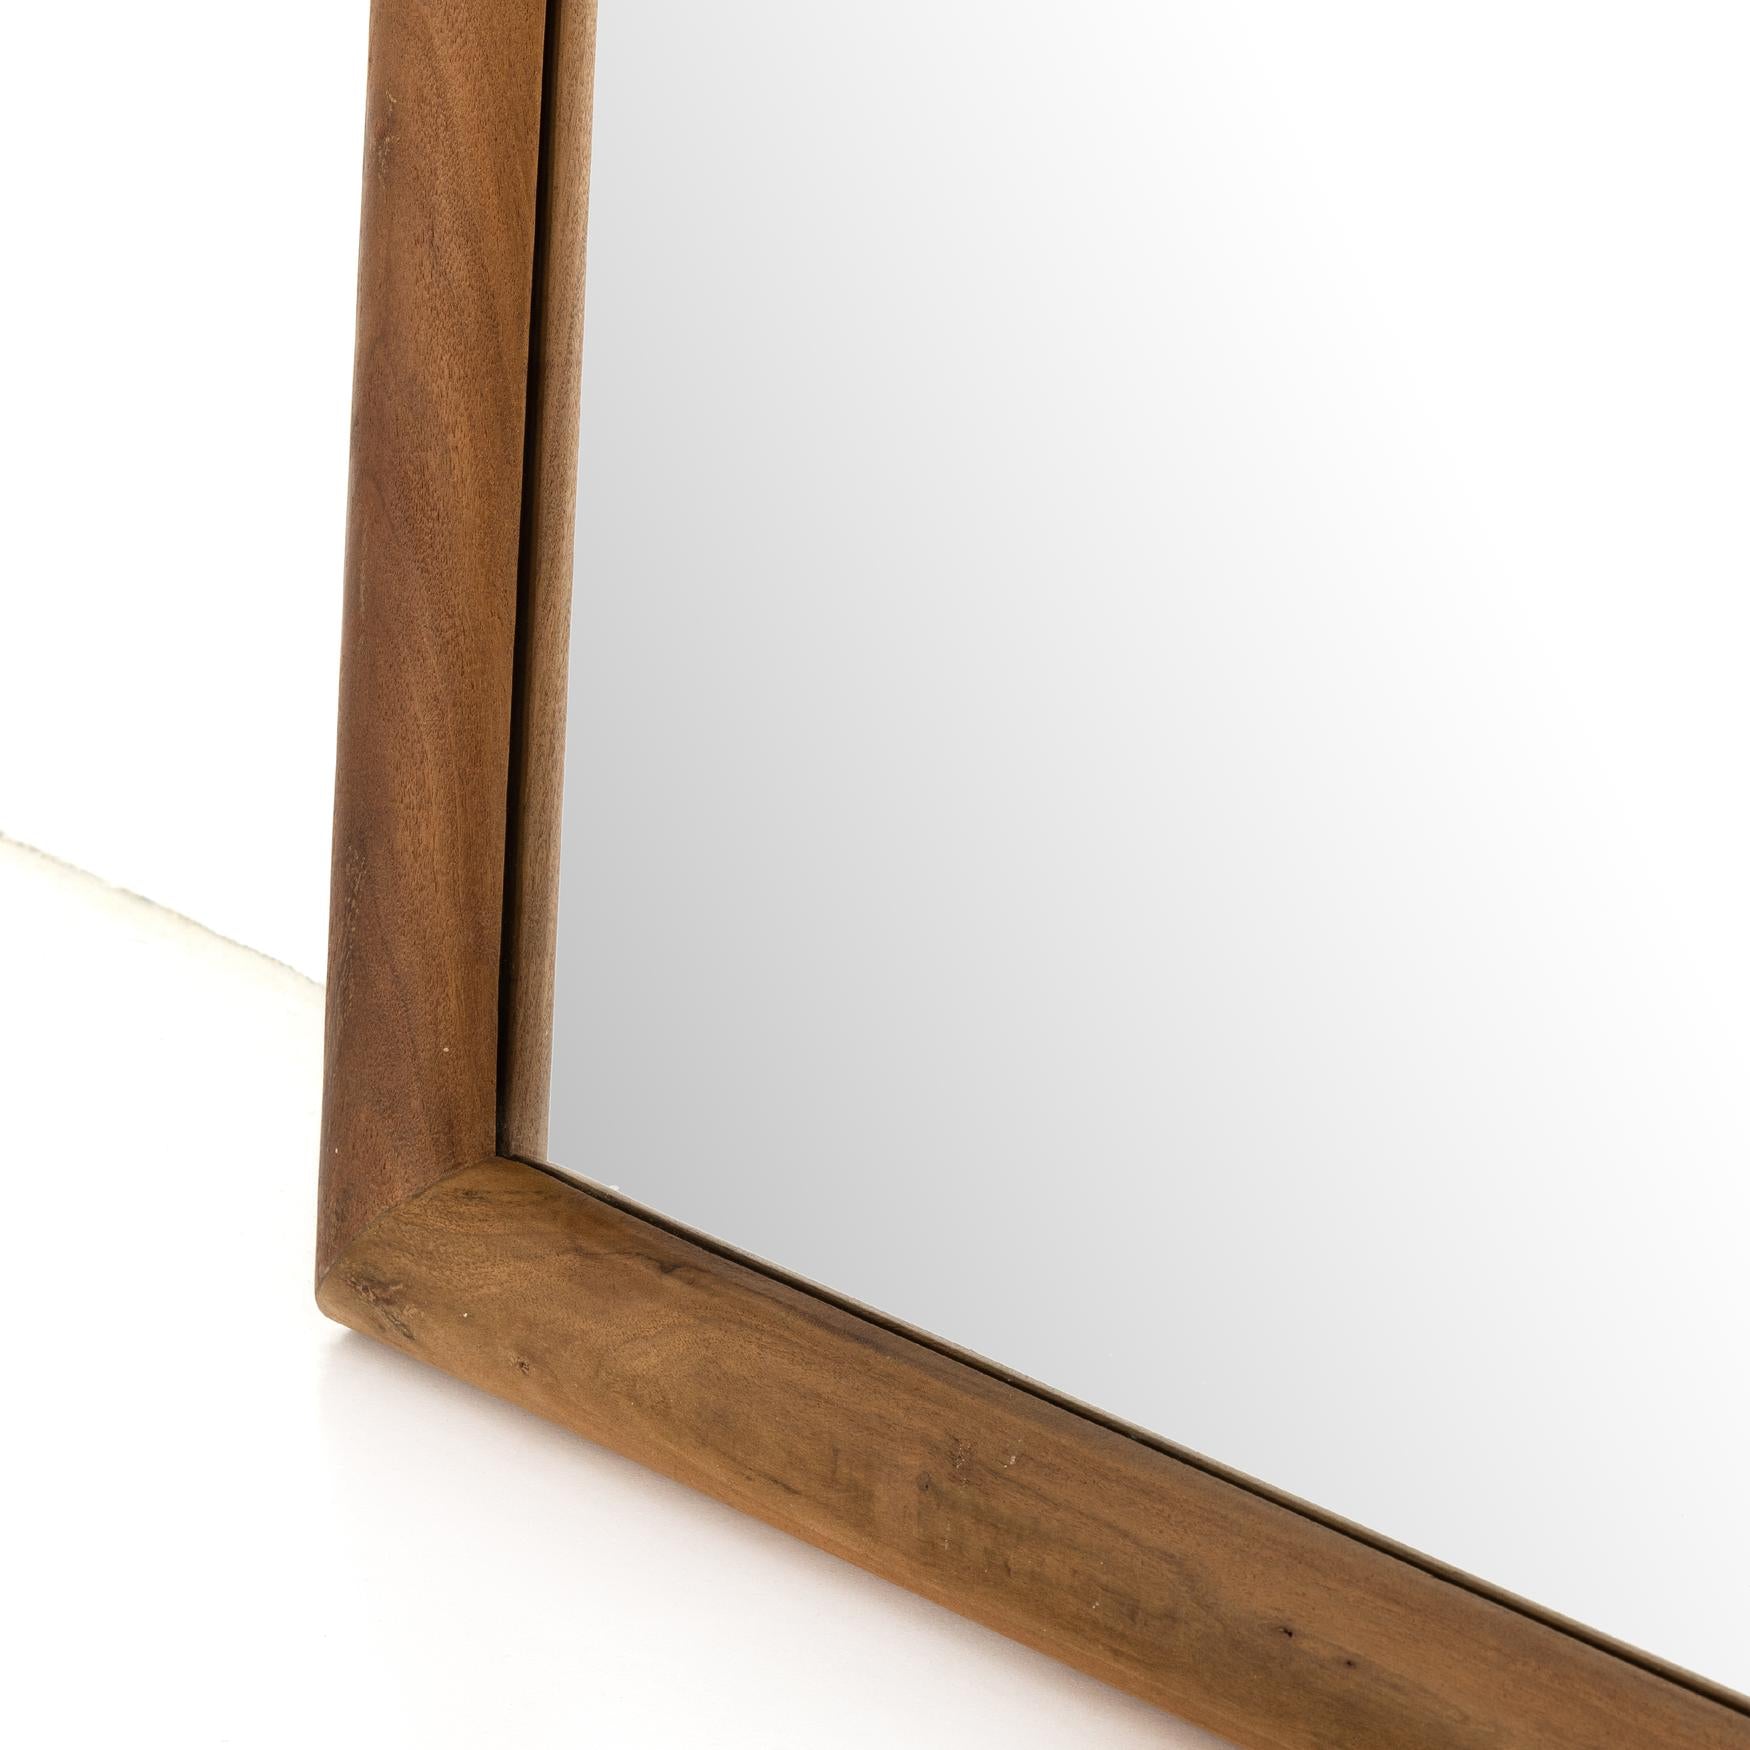 Gulliver Floor Mirror - StyleMeGHD - Modern Home Decor